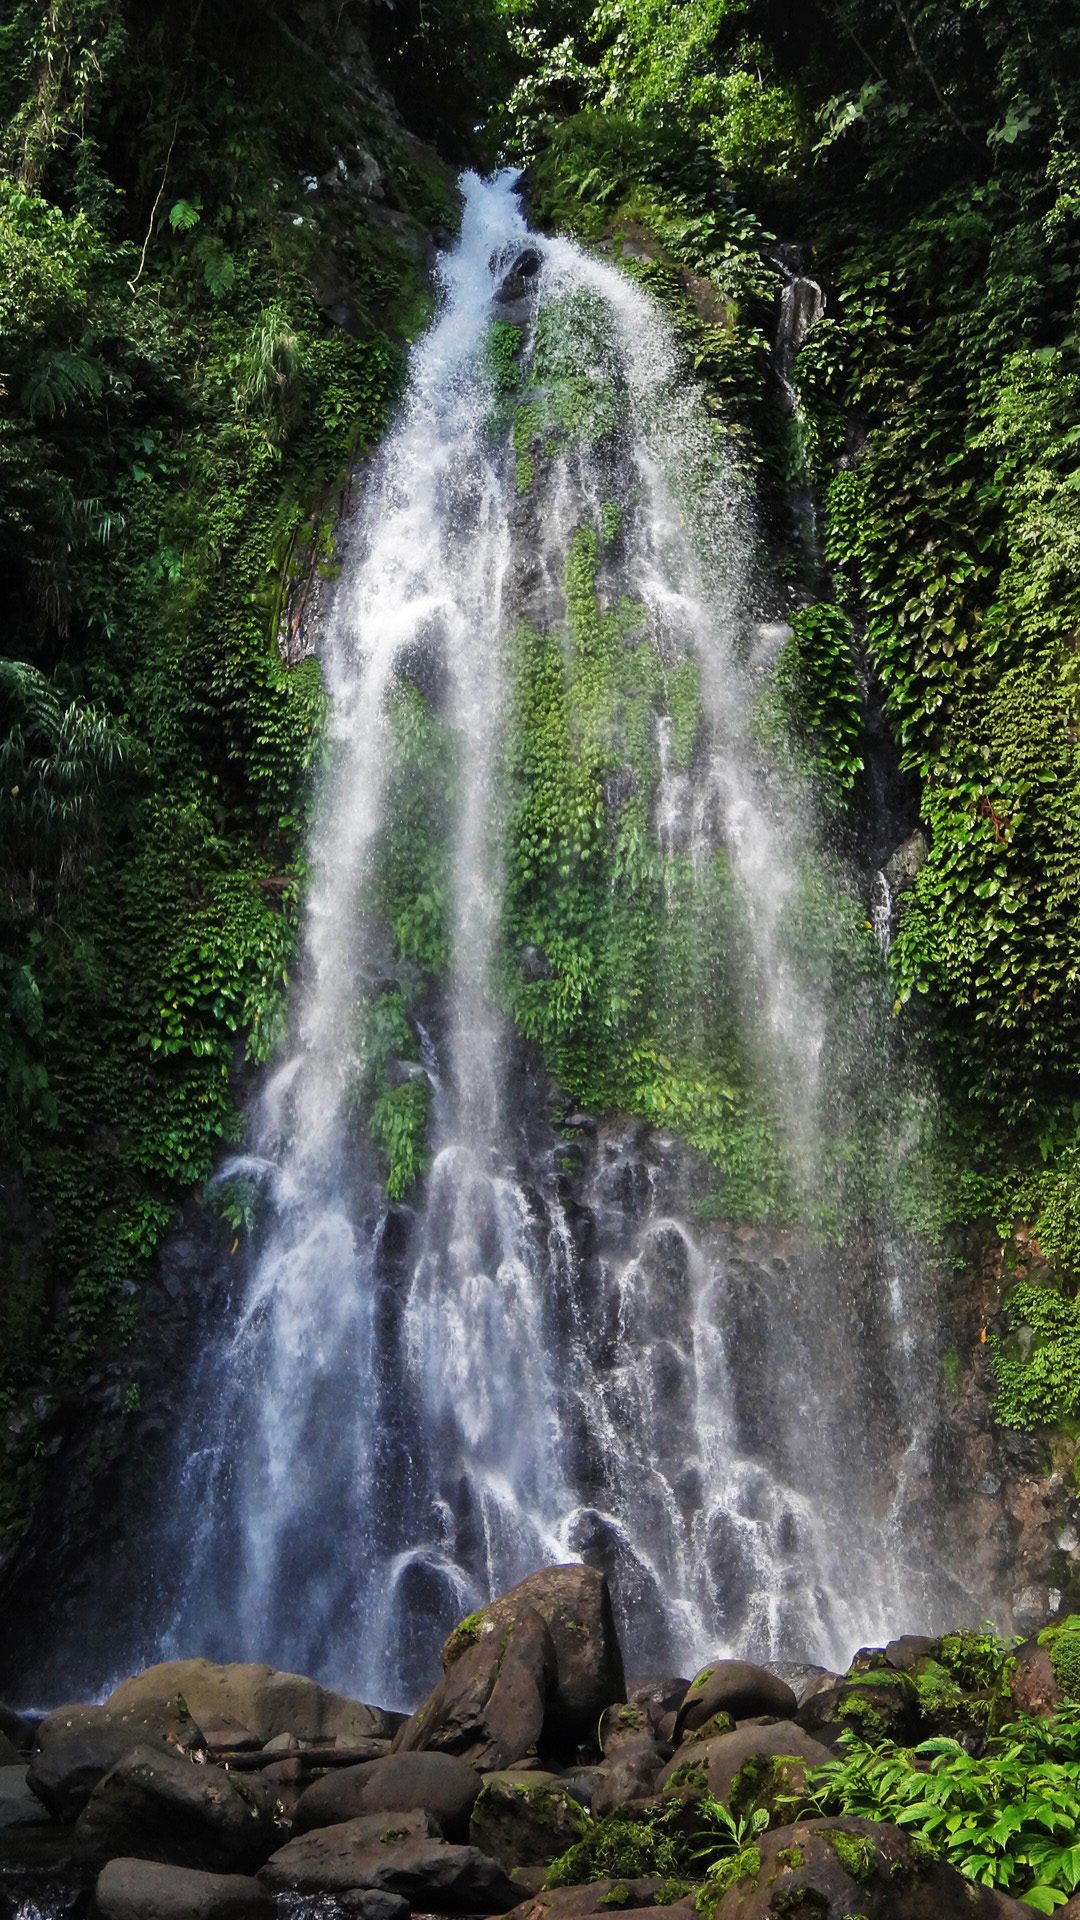 AN ABUNDANCE OF WATERFALLS. Biliran has many majestic waterfalls like this. The province has a raw, quiet beauty.
 